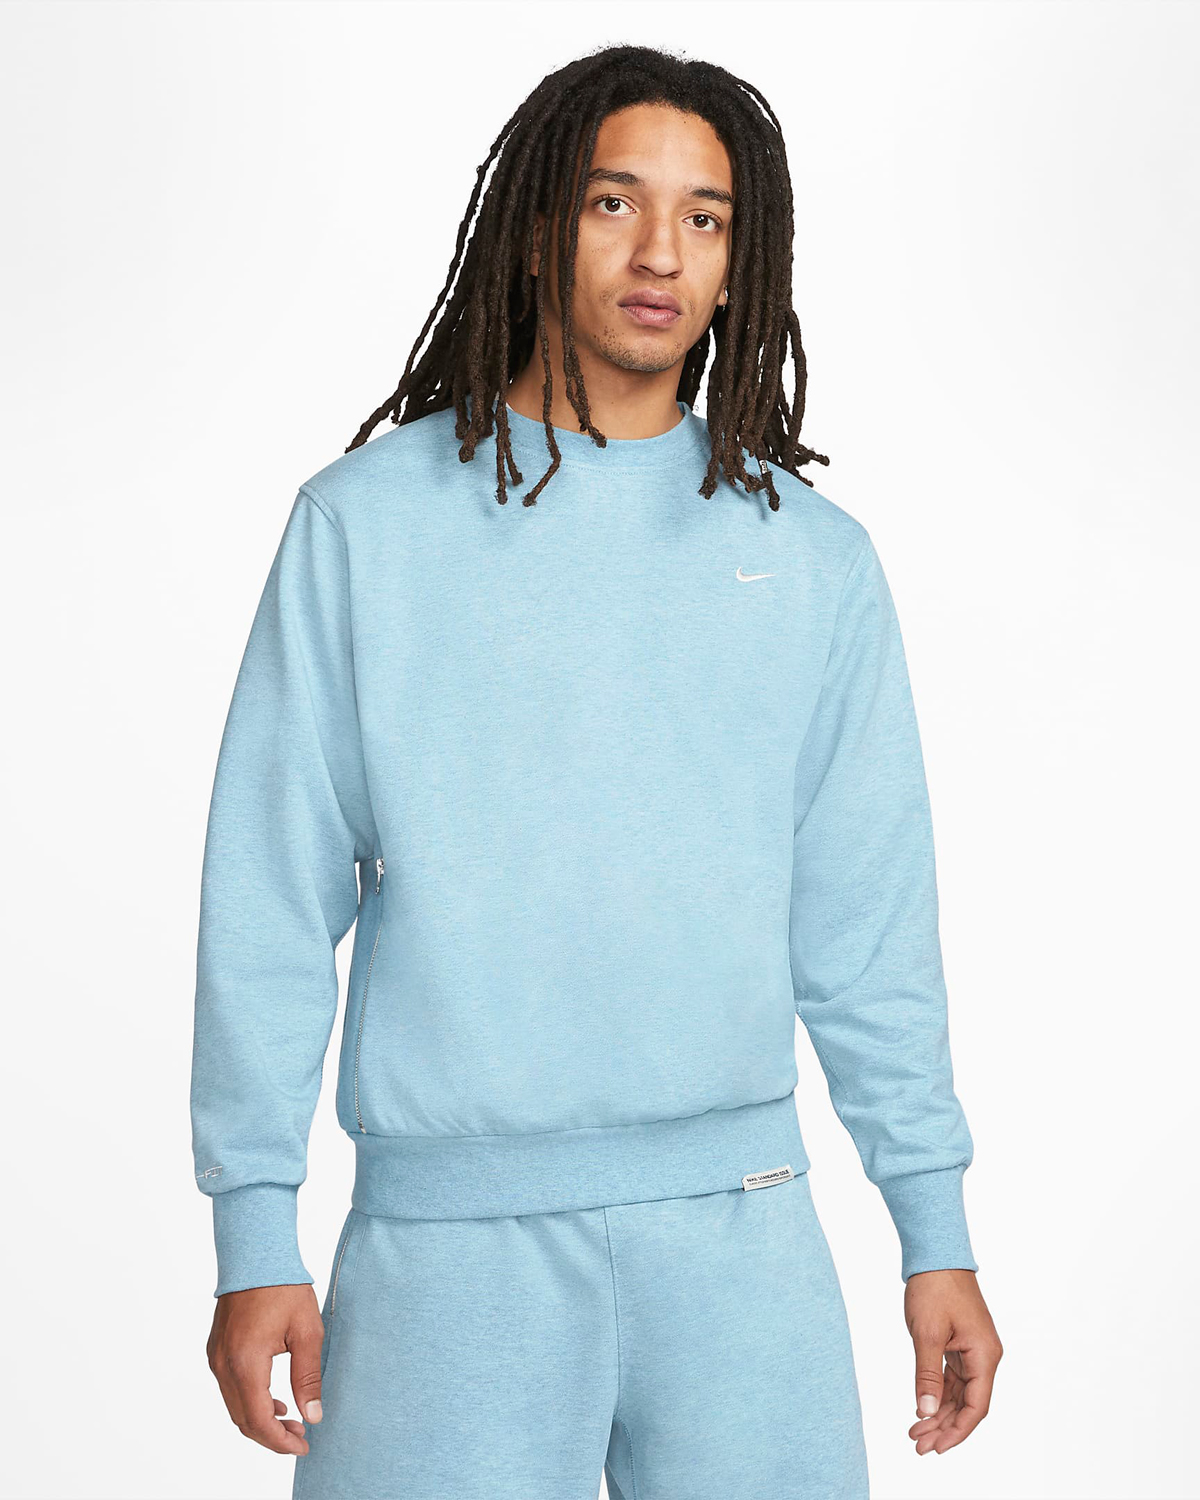 nike-standard-issue-sweatshirt-worn-blue